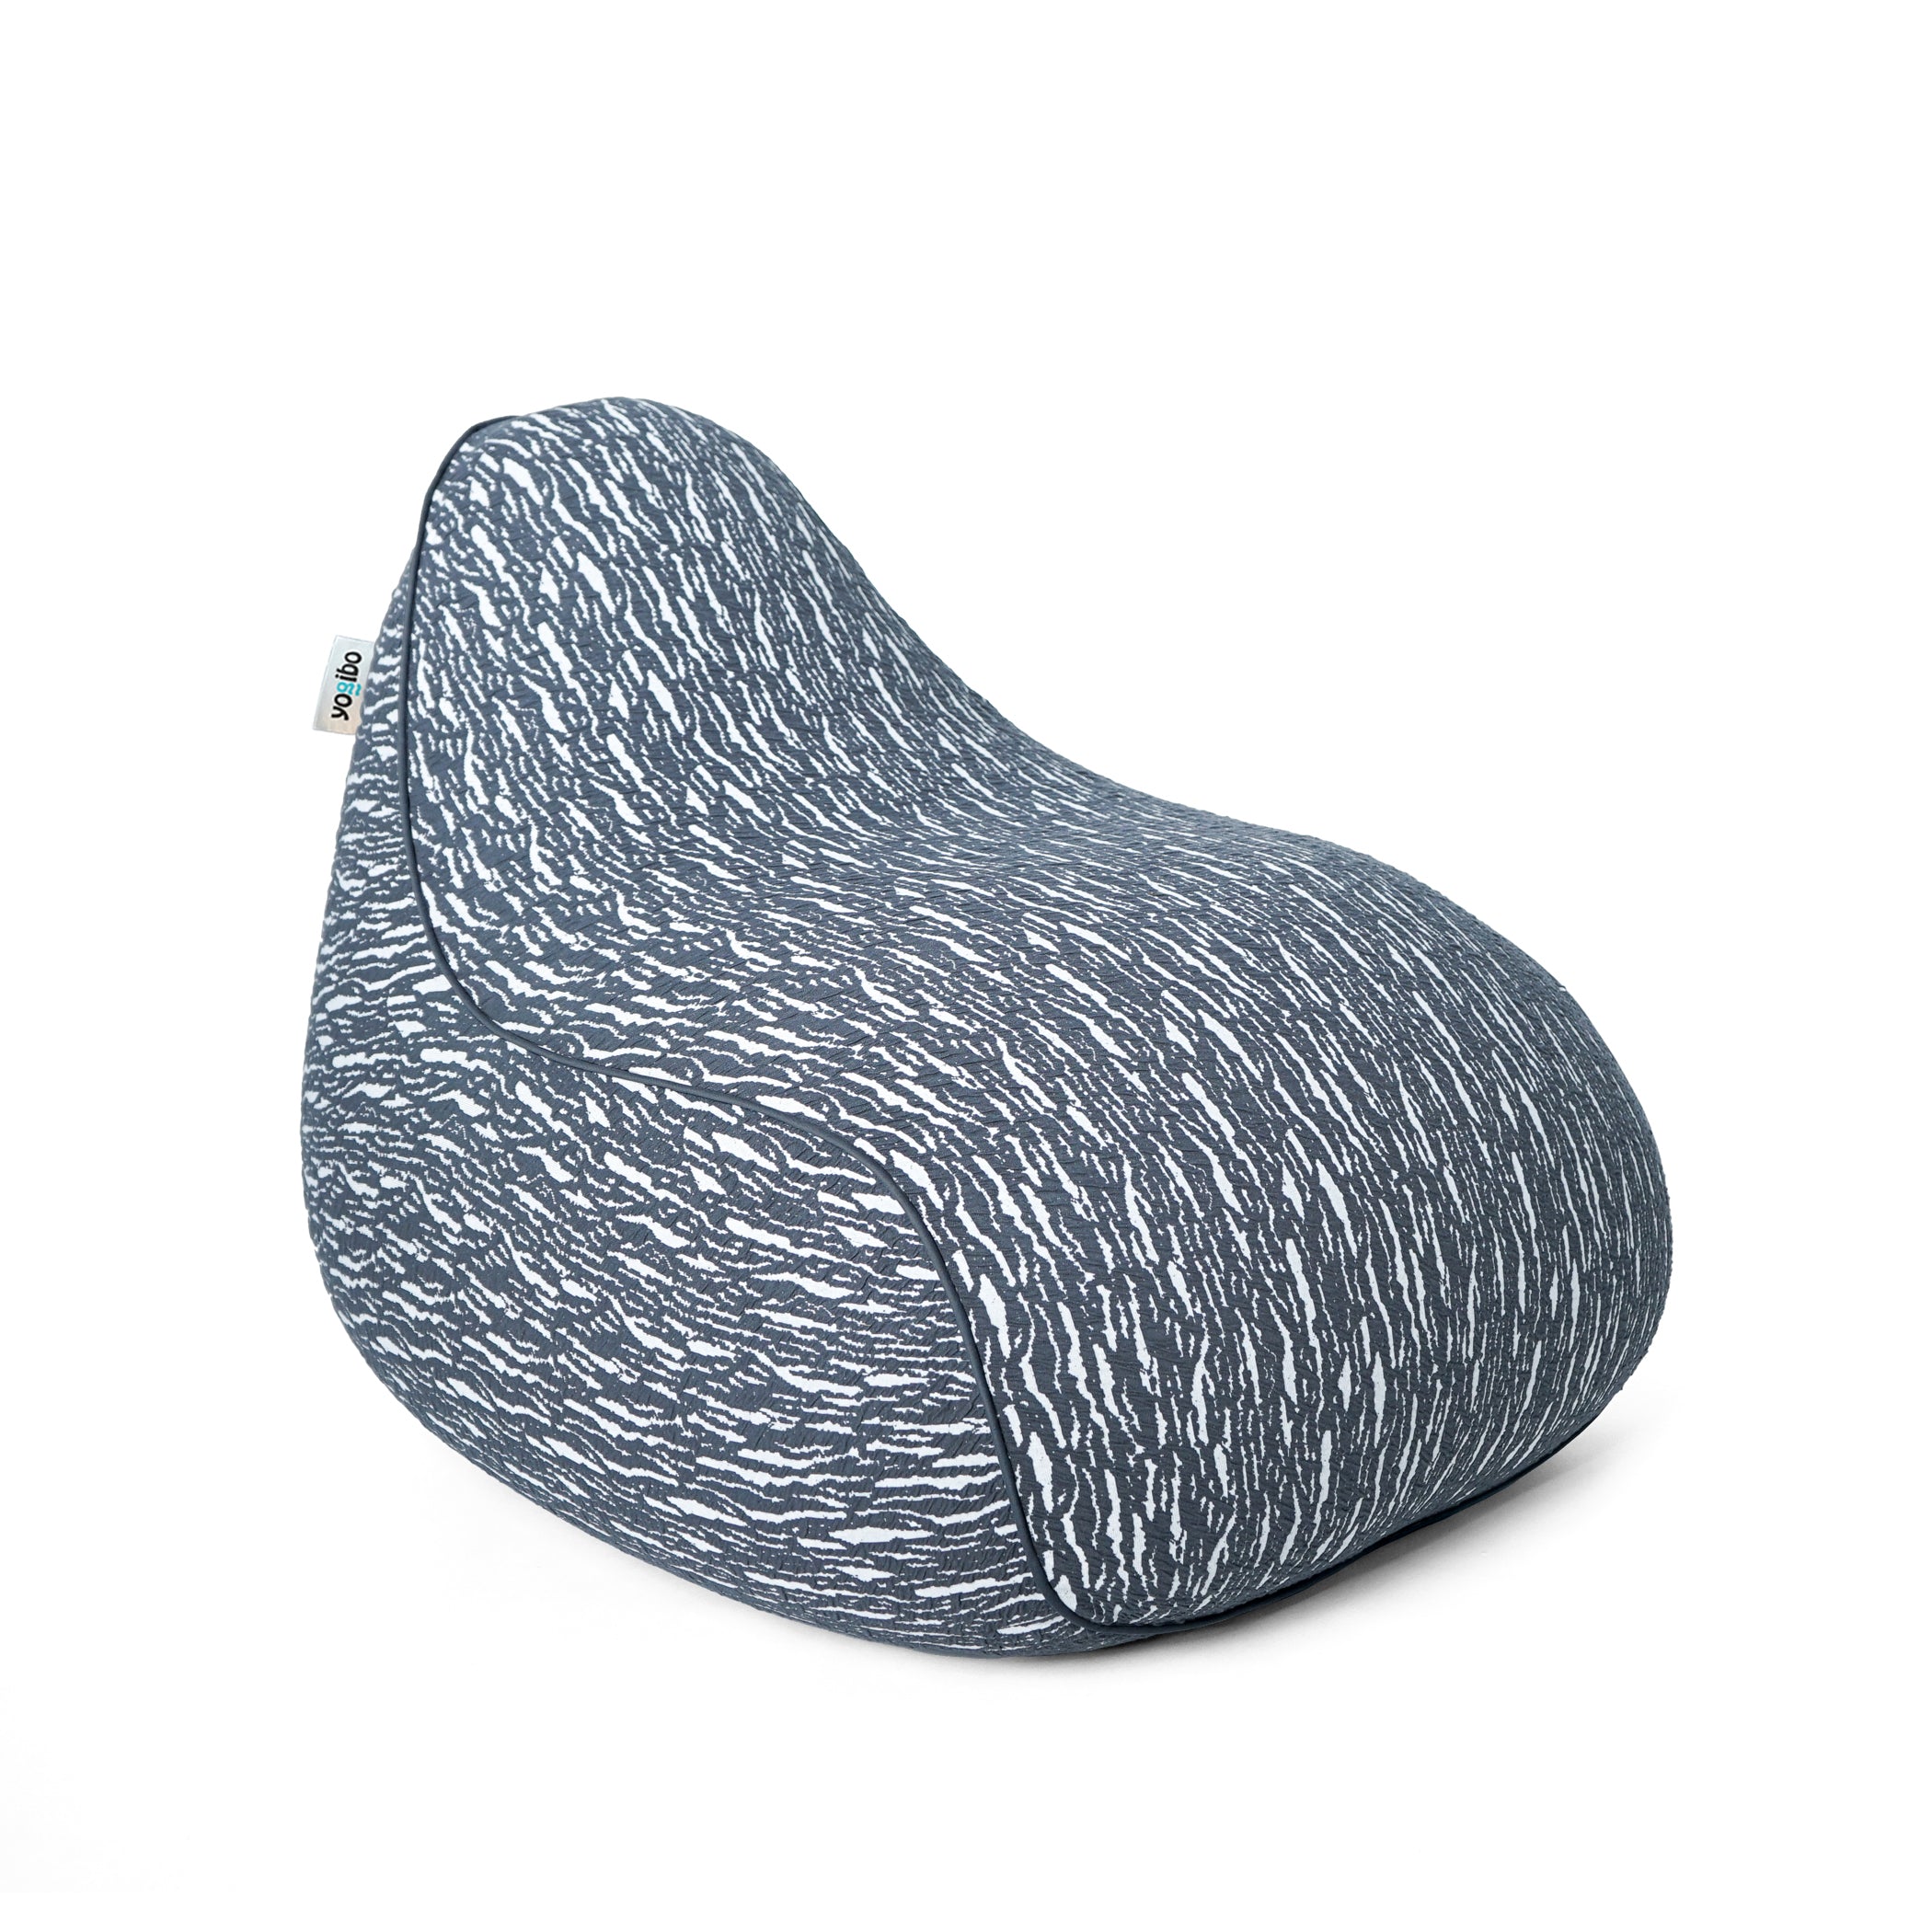 Luxe Lounger: An Upscale Individual Bean Bag Chair - Yogibo®